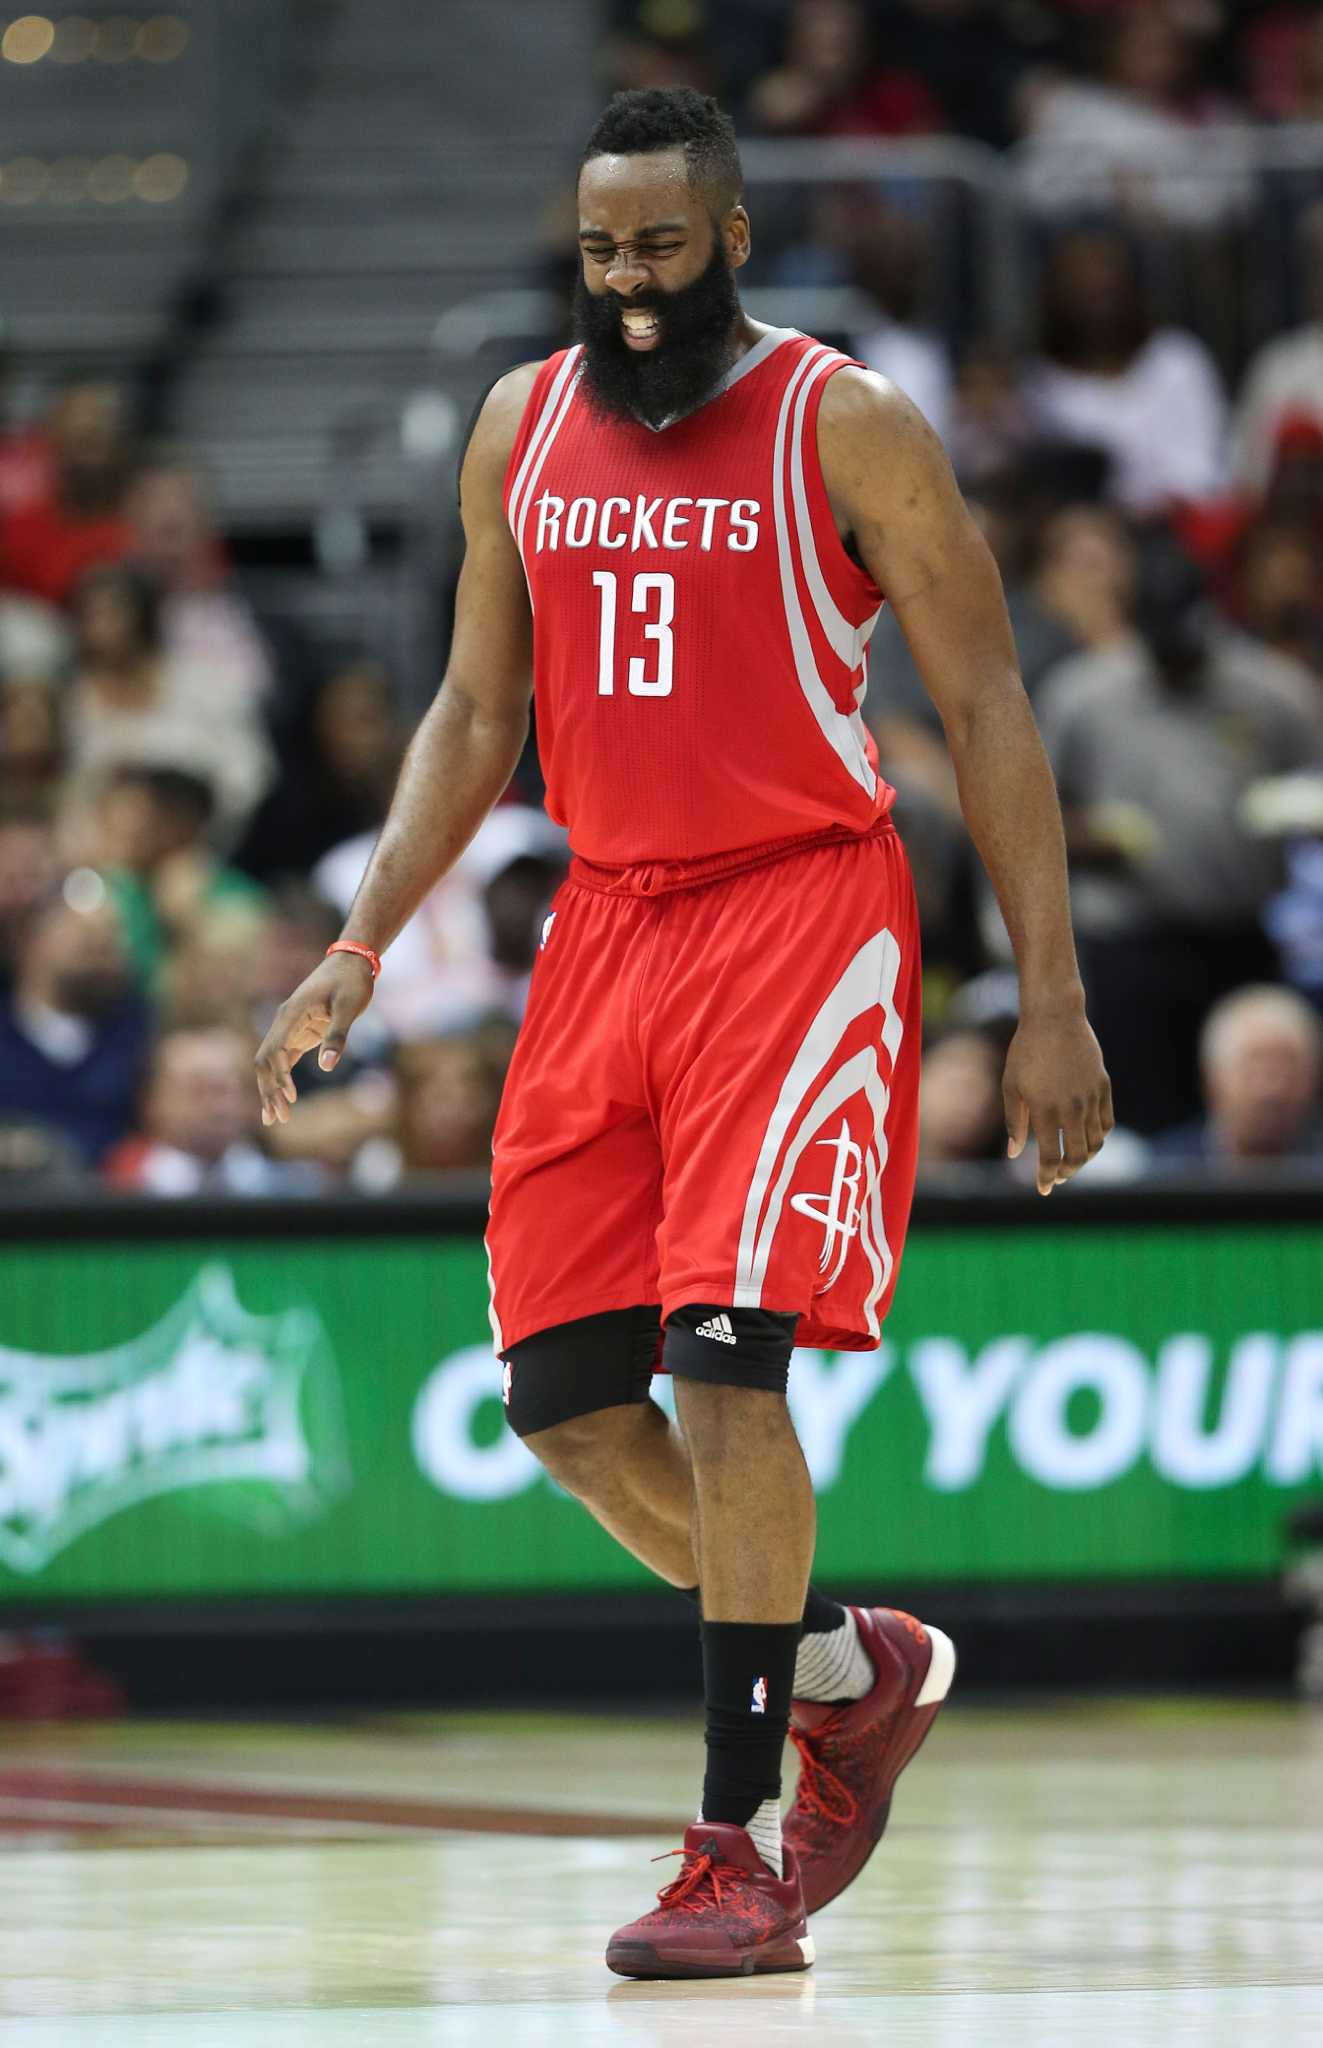 James Harden Red Houston Rockets Adidas Jersey (Size XL)